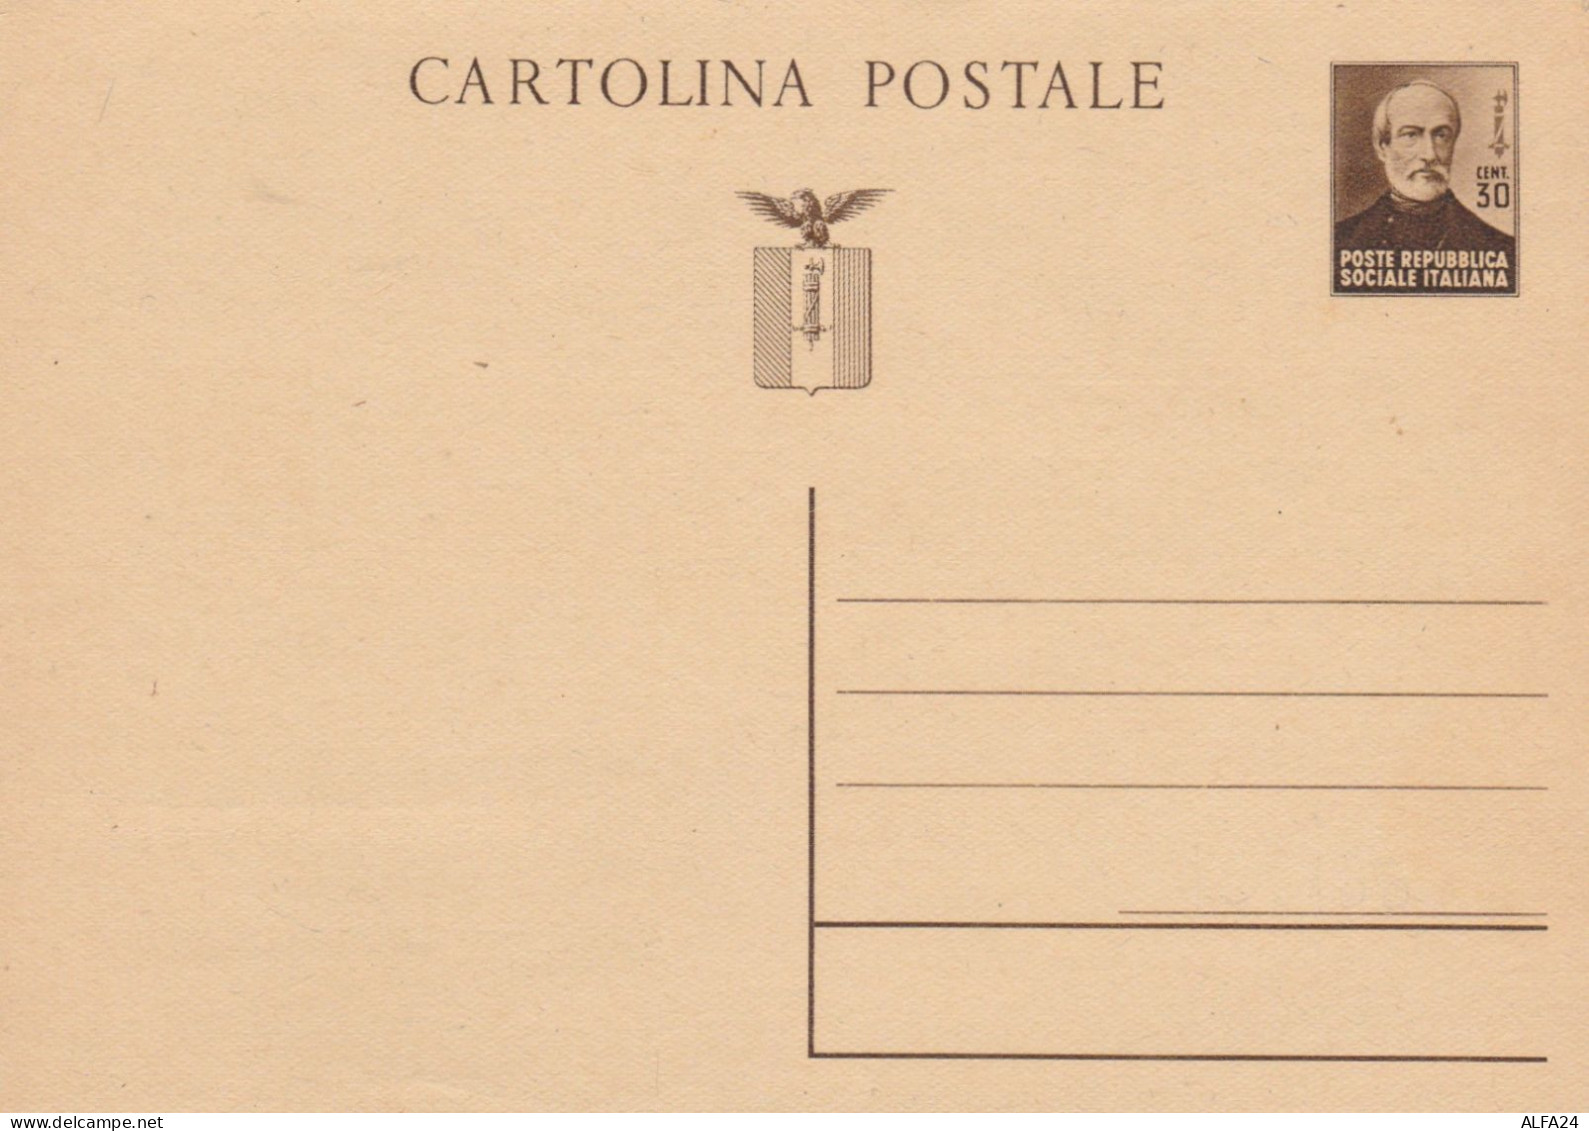 INTERO POSTALE C.30 RSI MAZZINI 1944 -CARTA SPESSA-CAT.LASER 108 (HC98 - Stamped Stationery